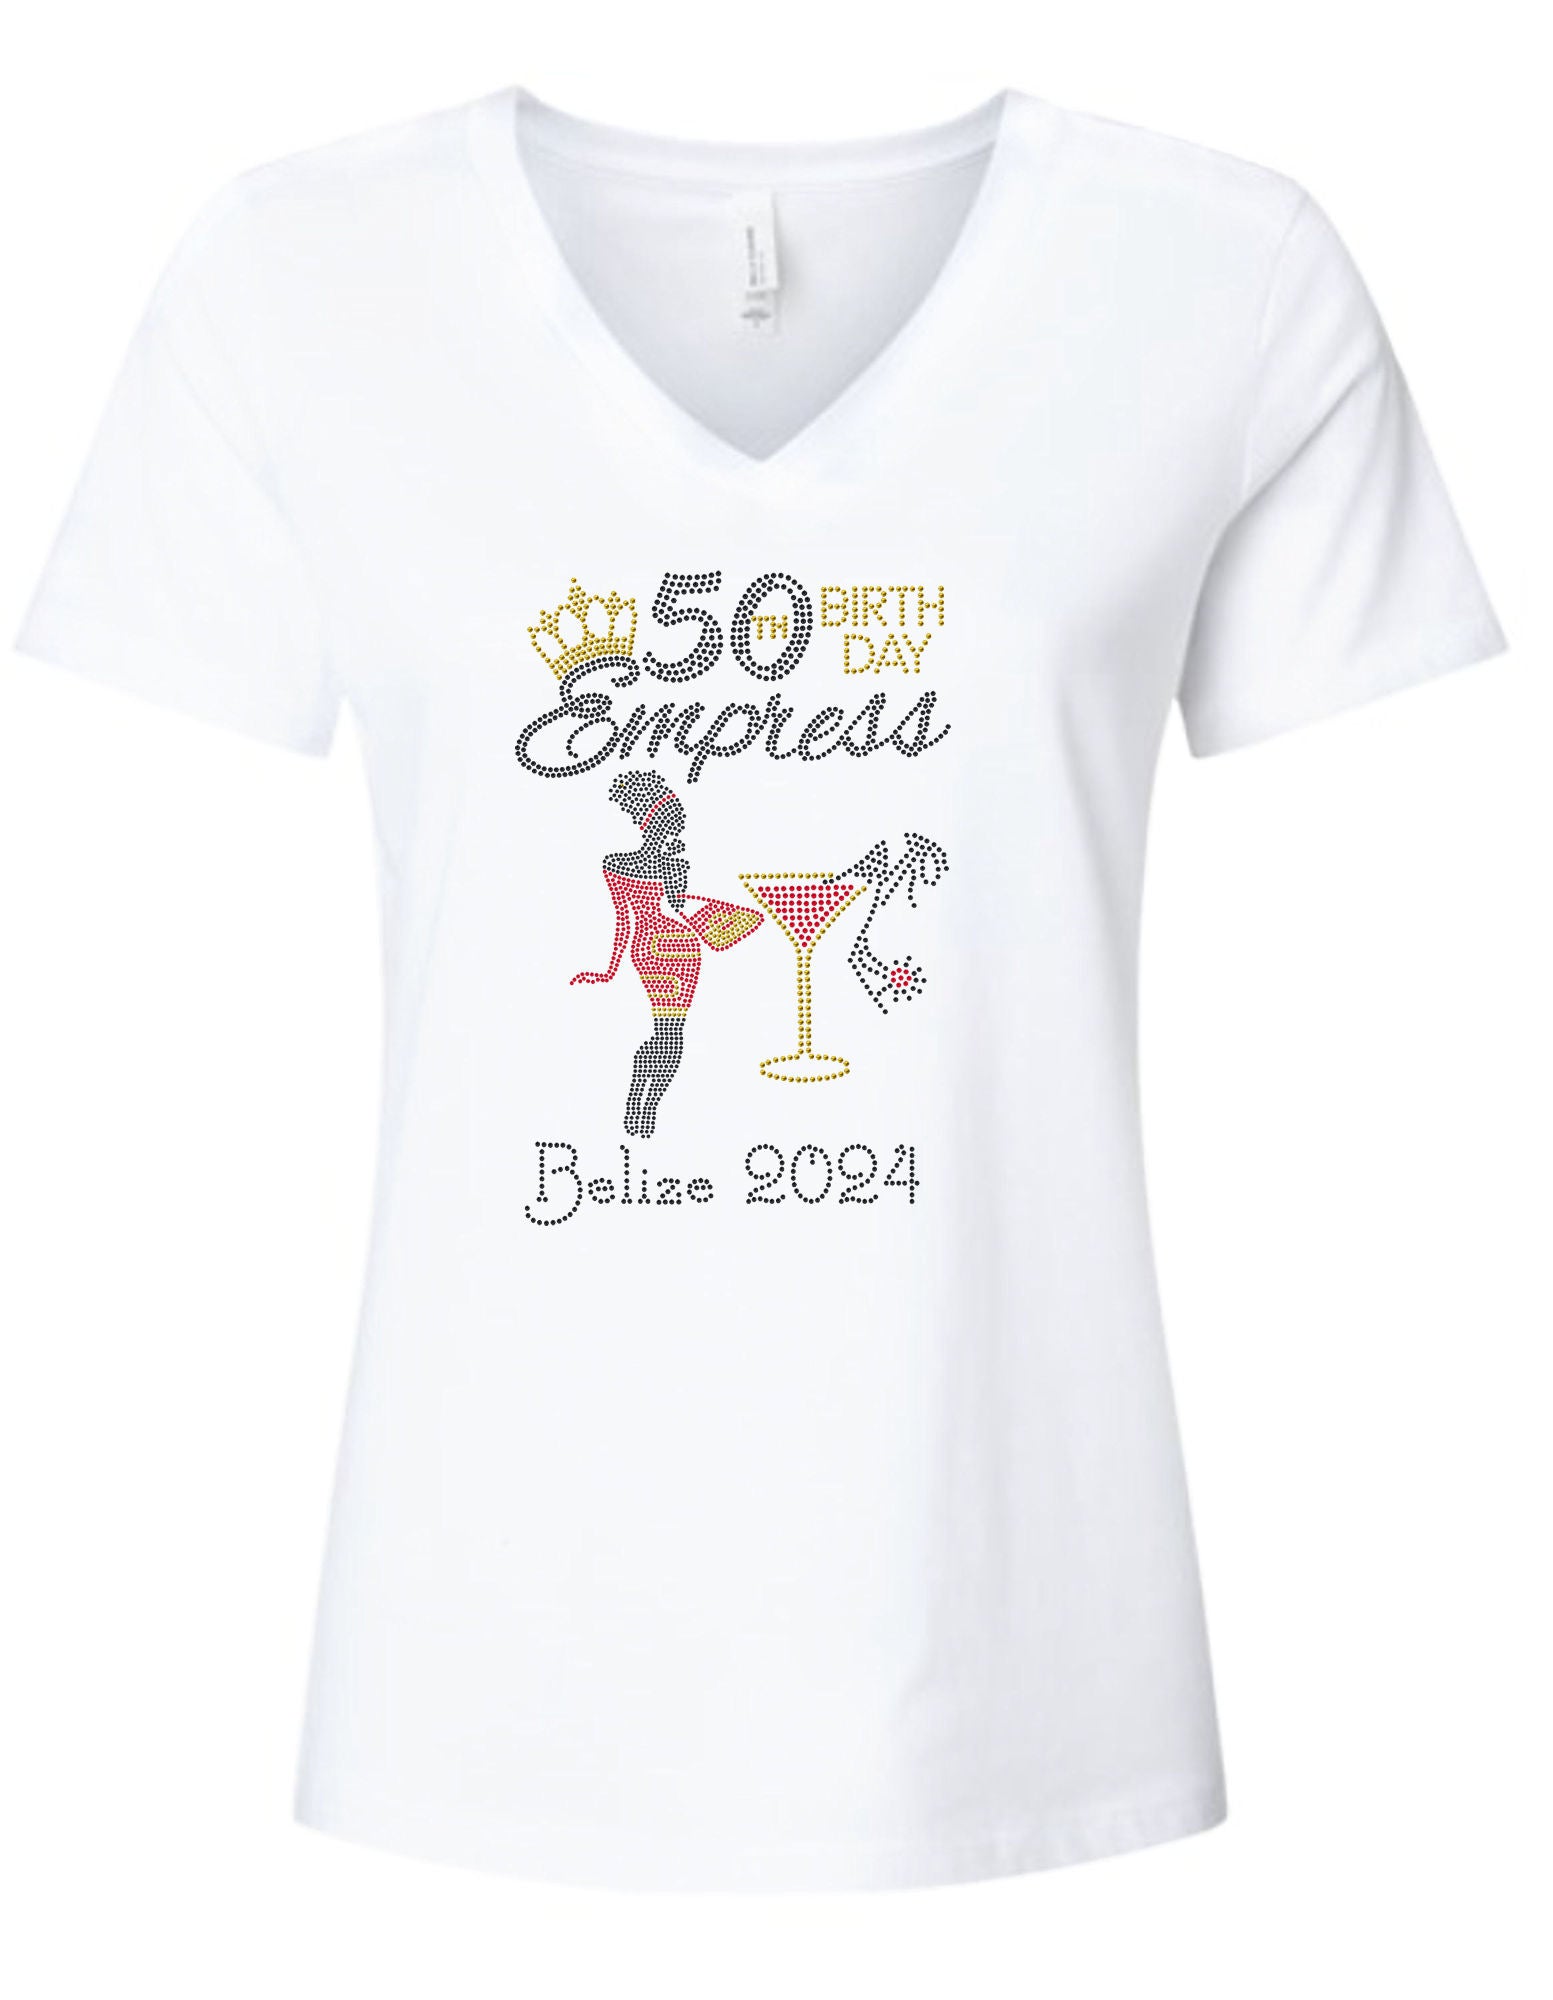 Birth Day Empress Personalized Rhinestone T-Shirt